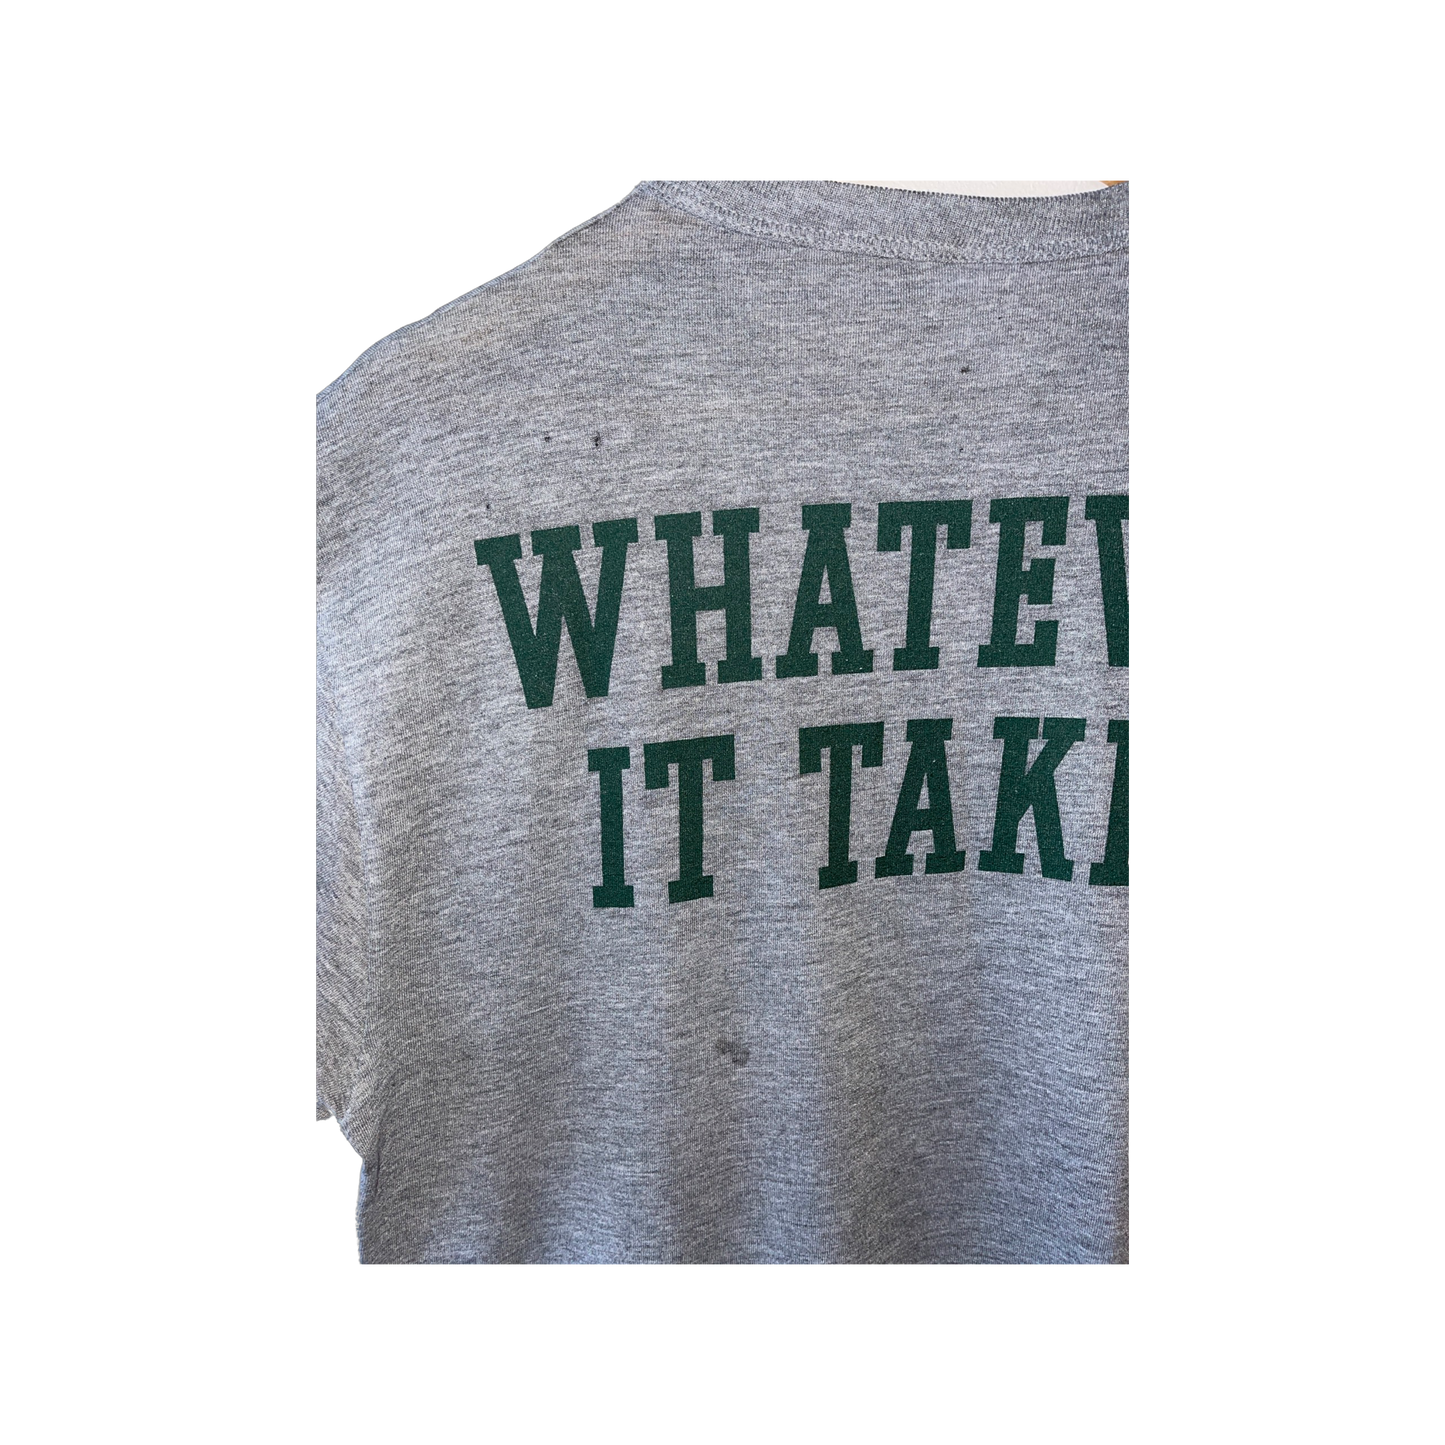 
                  
                    Vintage Dartmouth Hockey College T-Shirt - Size L
                  
                